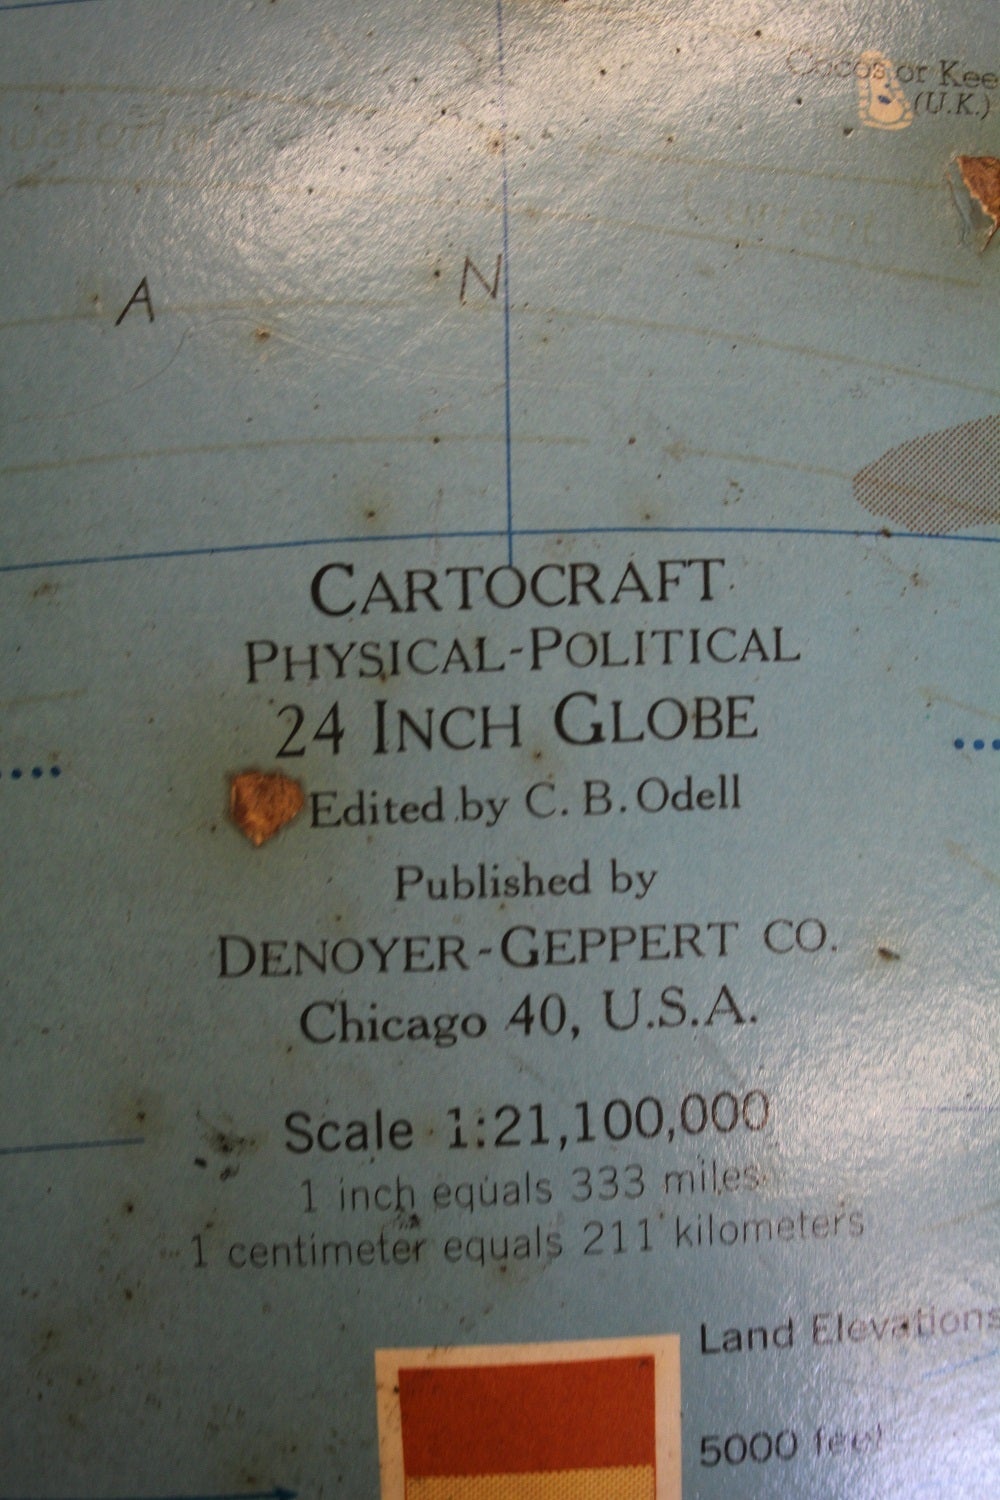 Large 1959s world globe by Denoyer-Geppert company.